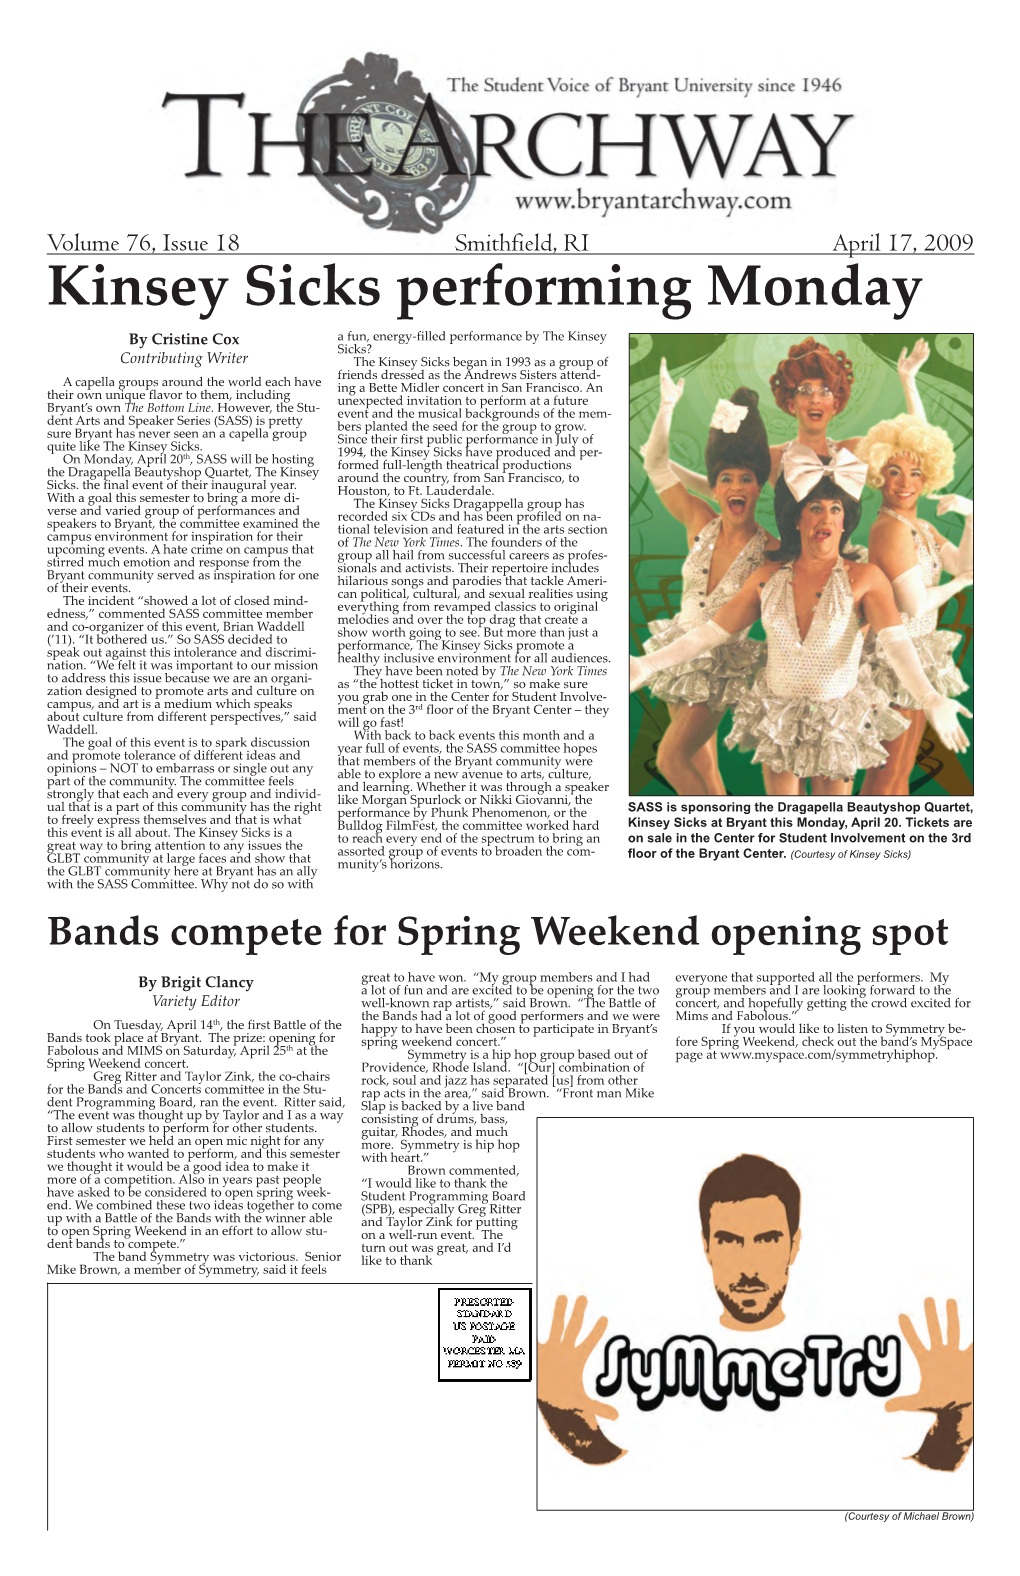 V. 76, Issue 18, April 17, 2009